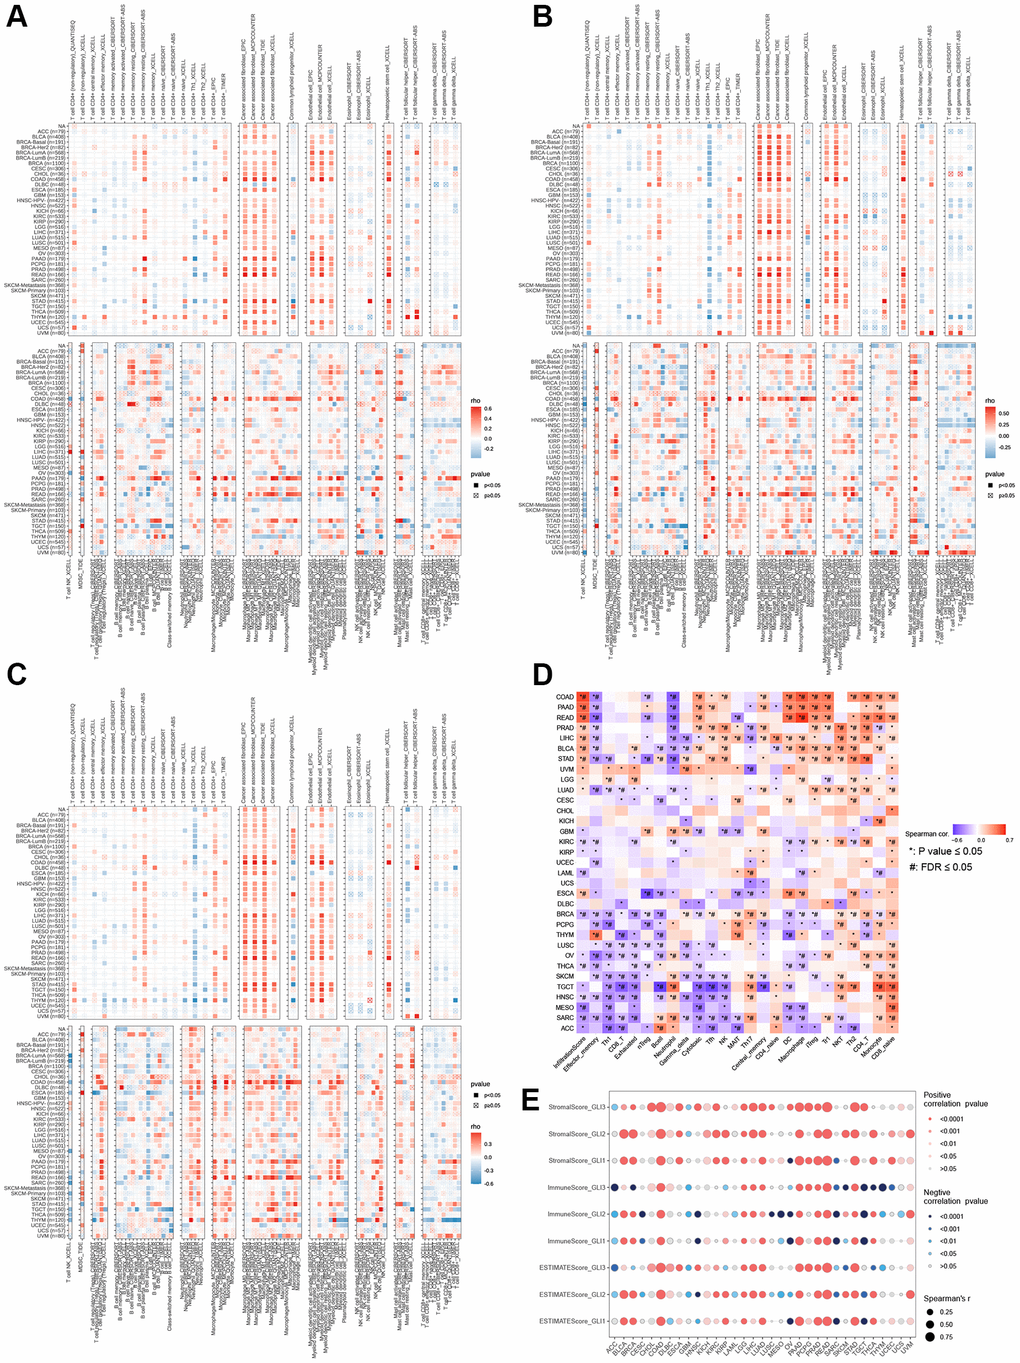 Infiltration of immune cells in tumors. Correlation of GLI1 (A), GLI2 (B), and GLI3 (C) with tumor-infiltrating immune cells according to different algorithms. (D) Correlation of GLI1, GLI2, and GLI3 with different species of immune cell subtypes. (E) Relationship between GLI1, GLI2, and GLI3 and three scores such as ESTIMATEScore, ImmuneScore, and StromalScore in different cancer types.